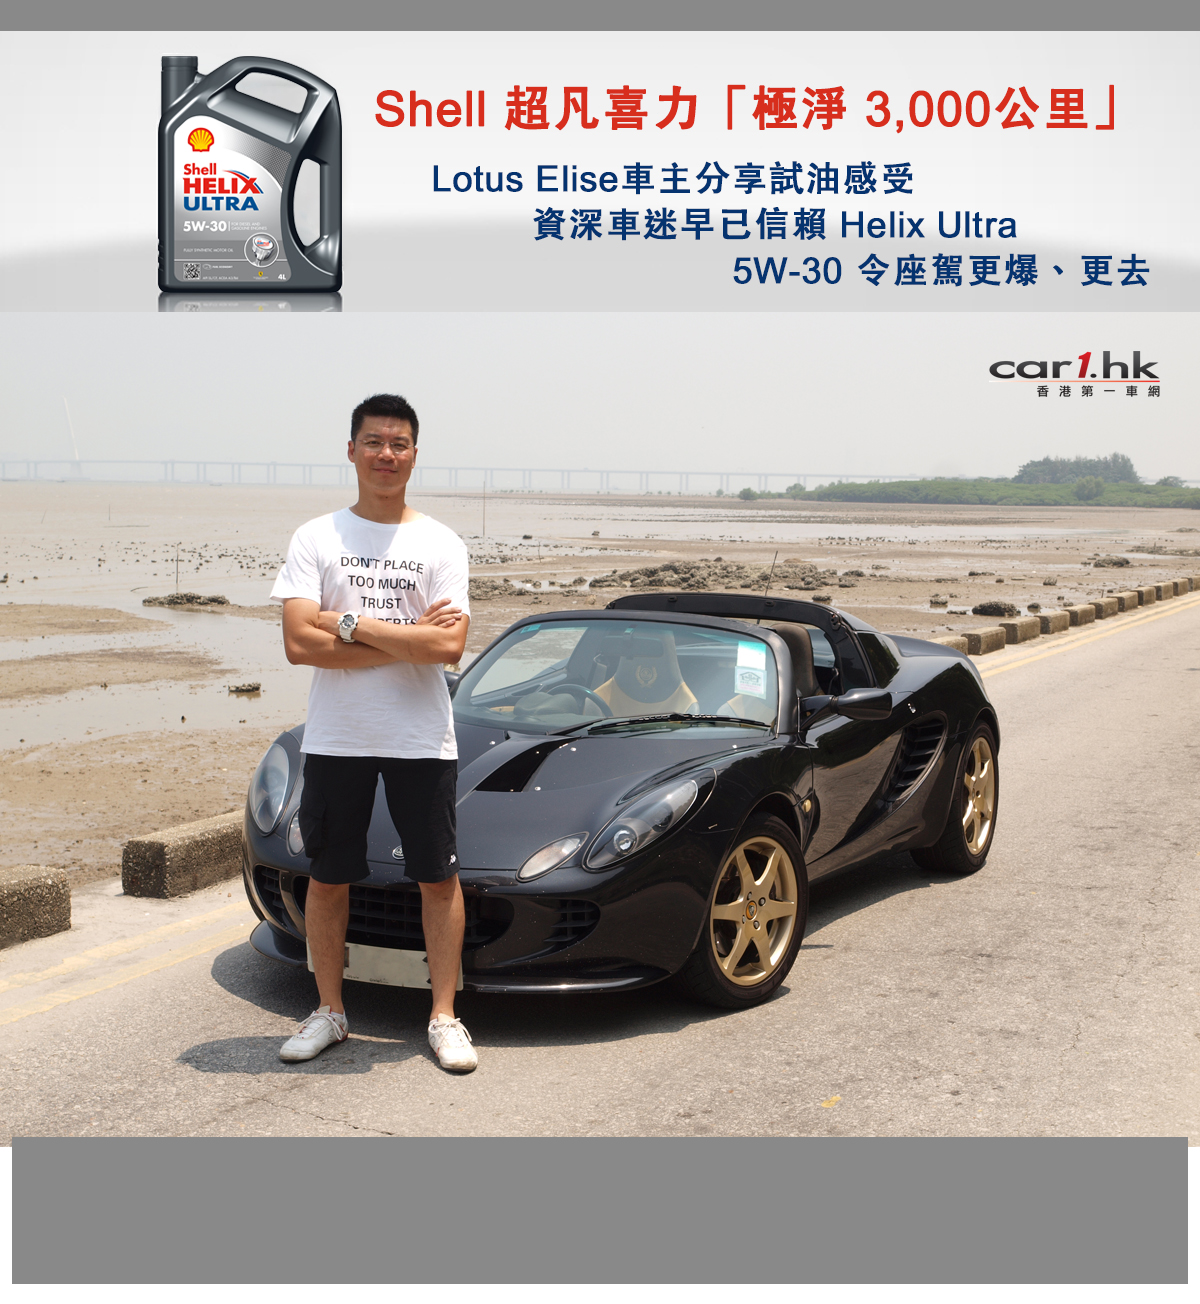 Shell 超凡喜力「極淨 3,000公里」Lotus Elise車主分享試油感受資深車迷早已信賴 Helix Ultra 5W-30令座駕更爆、更去